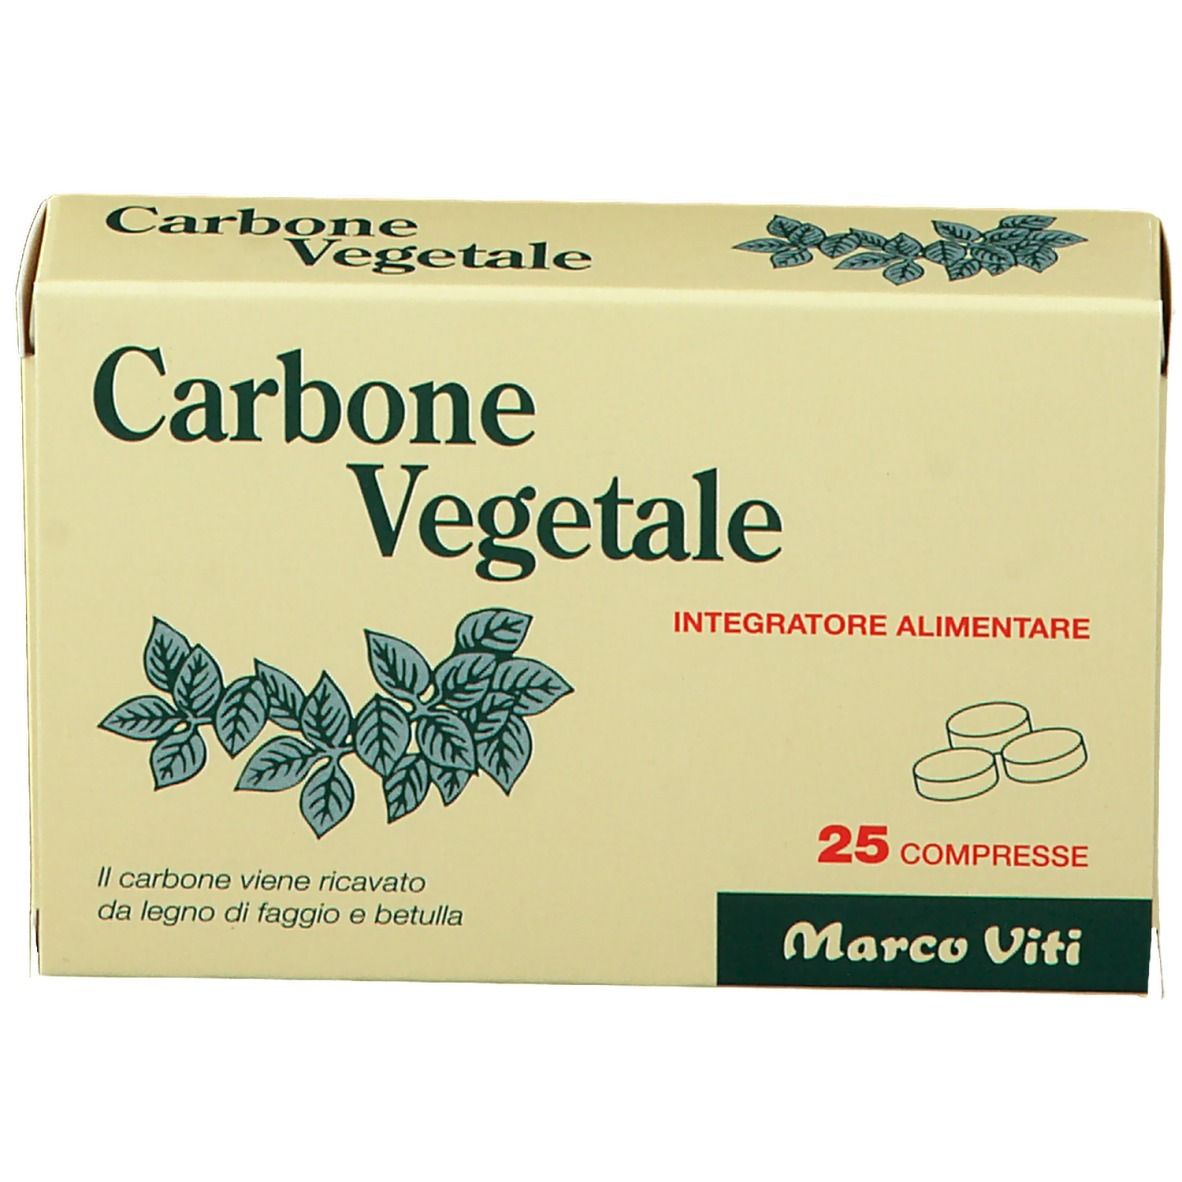 Carbone Vegetale Compresse 120 pz